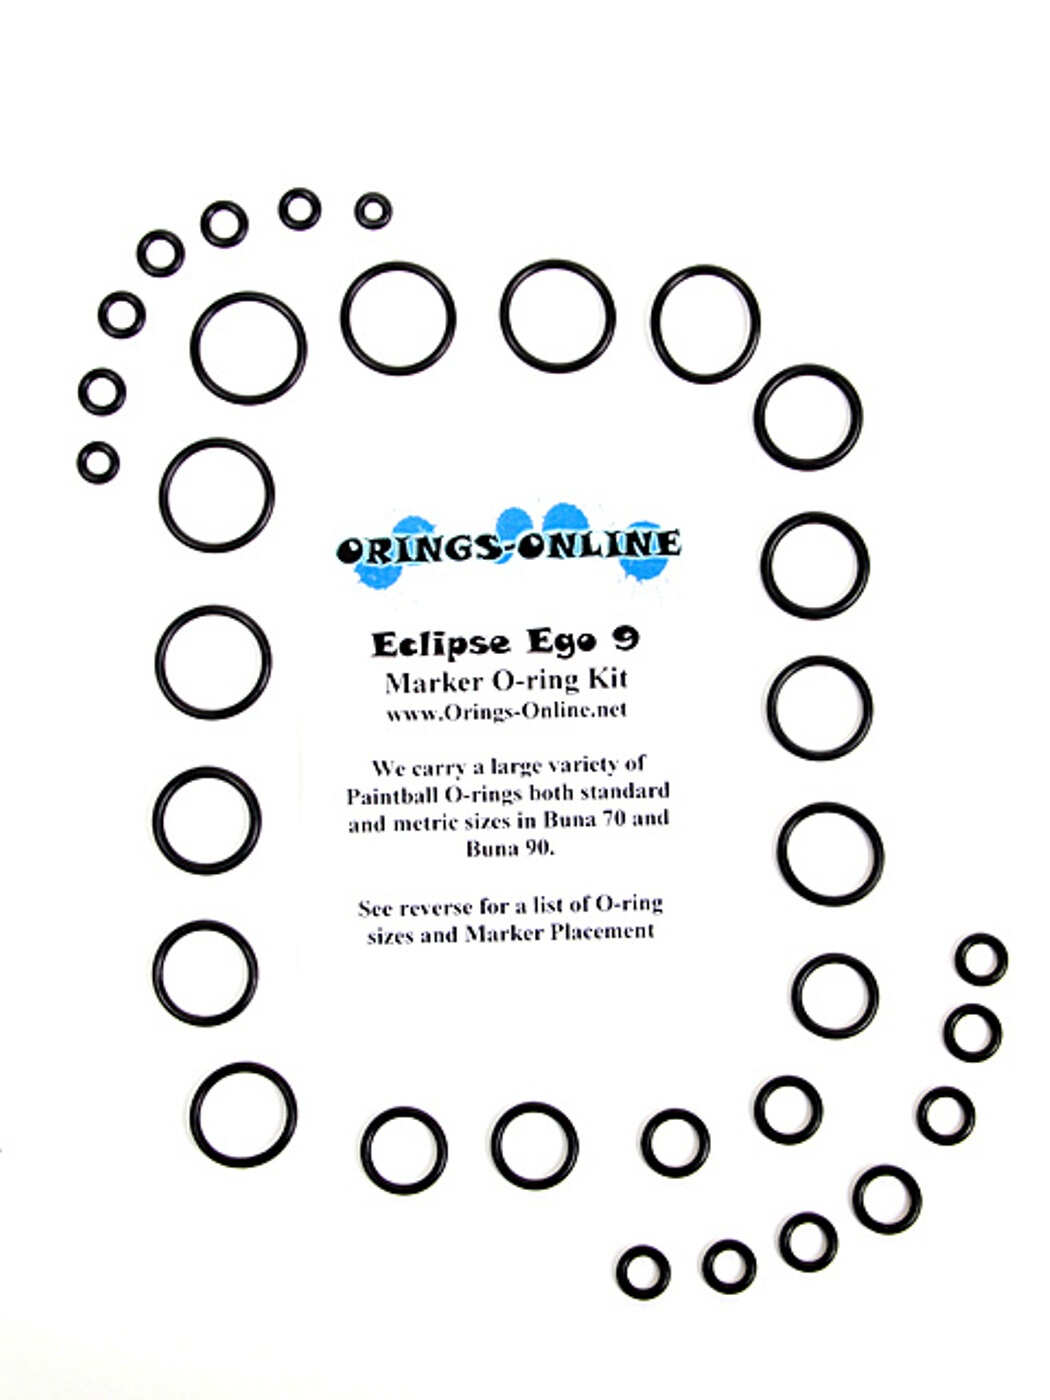 Planet Eclipse Ego 9 Marker O-ring Kit